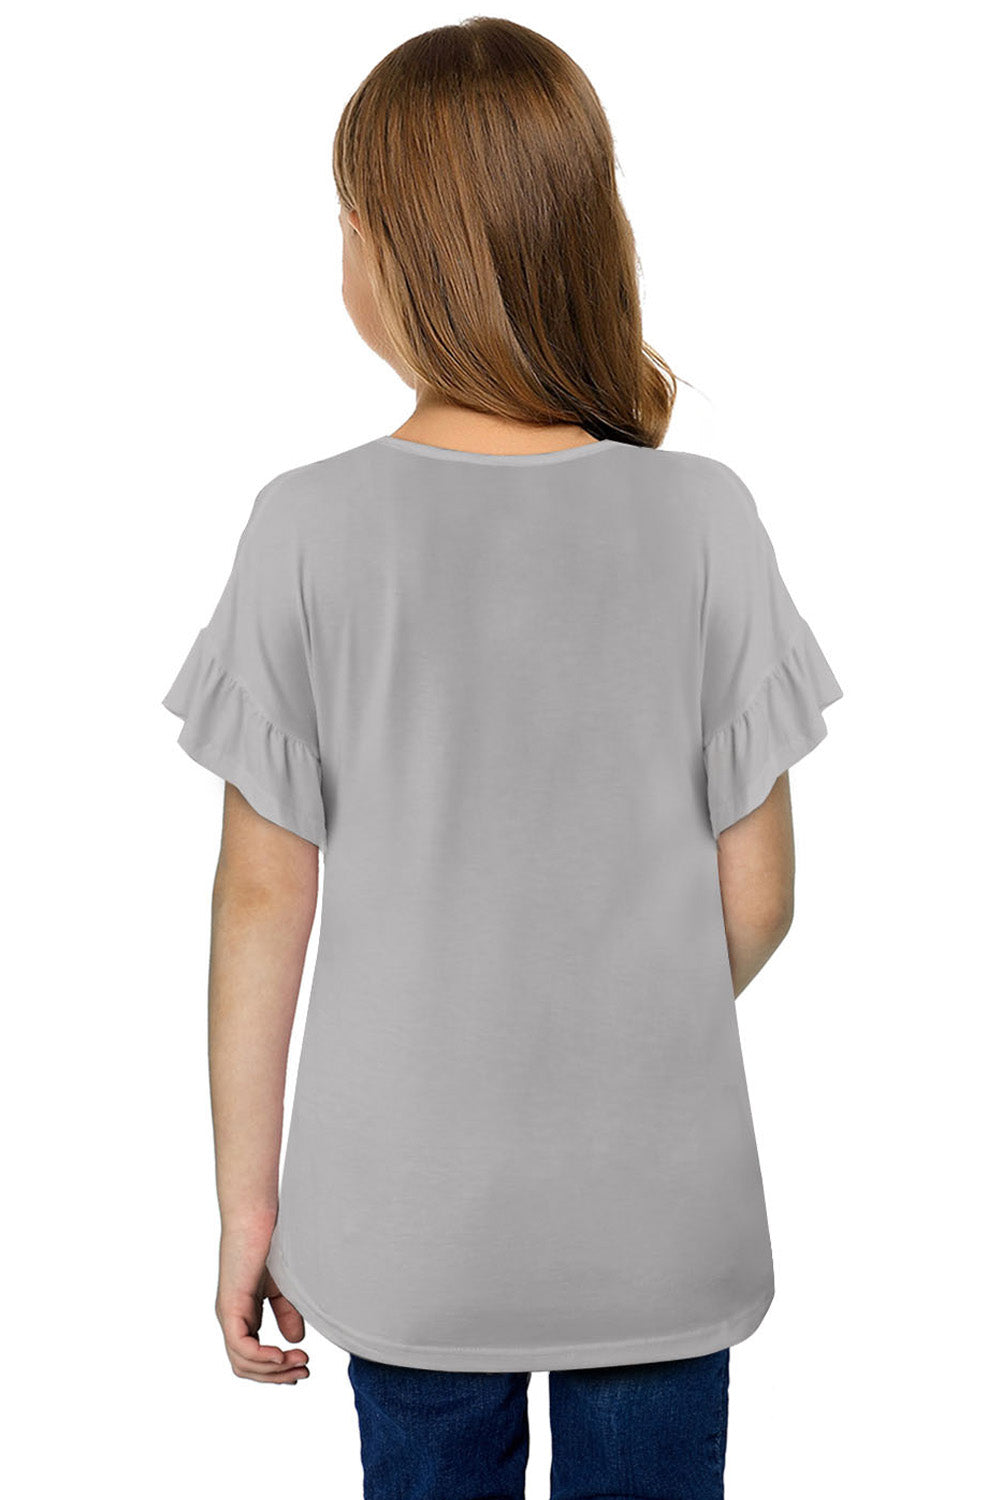 short sleeve shirts for teenage girl